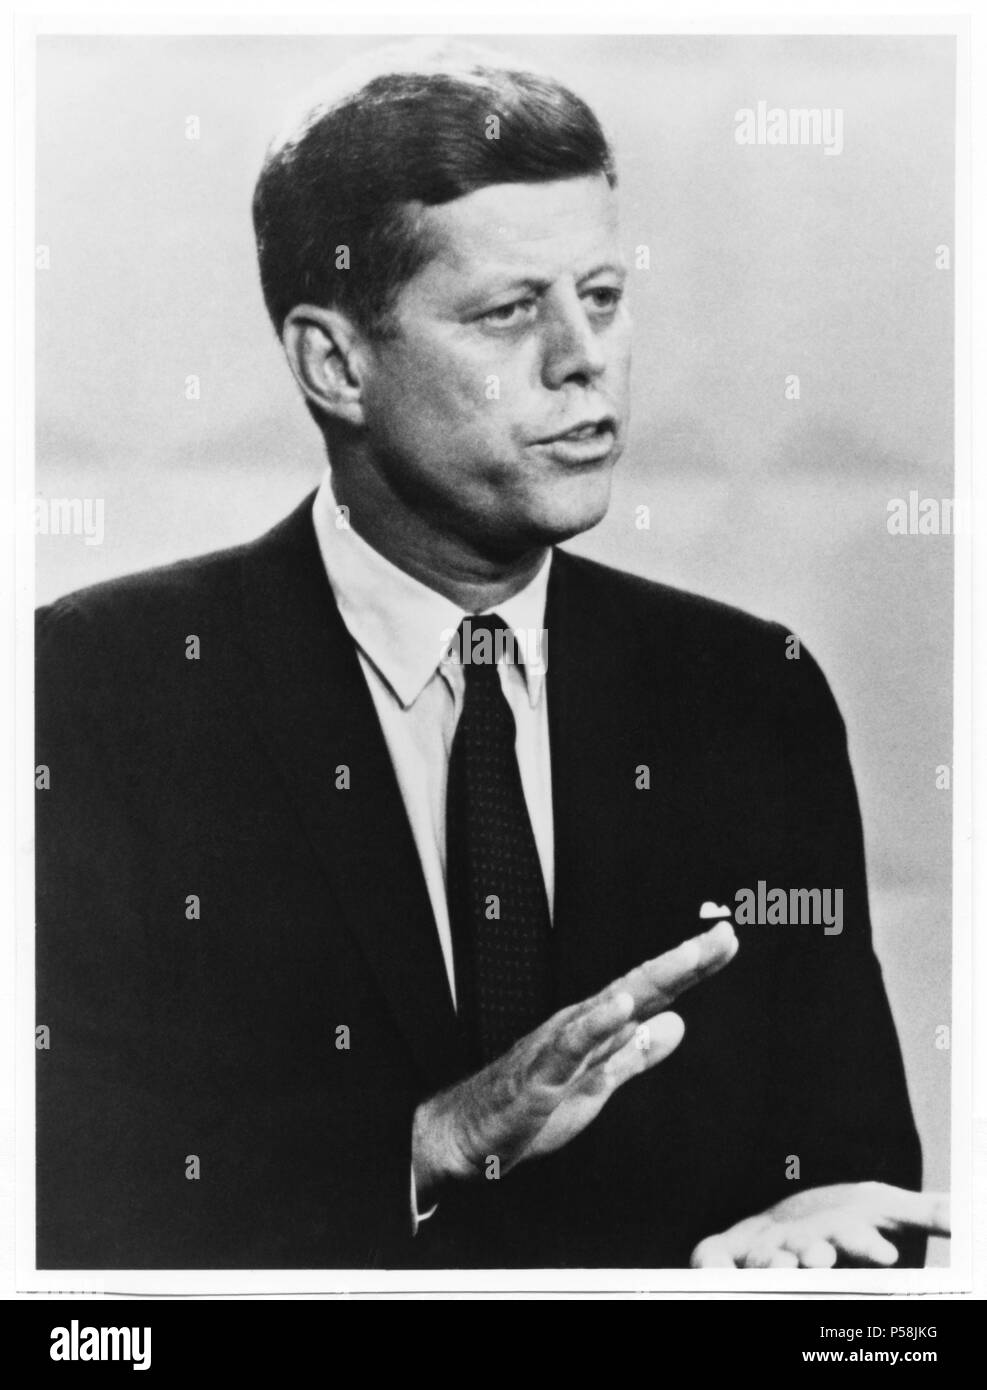 U.S. Senator John Kennedy, Democratic Nominee for U.S. President, during Televised Debate with Richard Nixon, 1960 Stock Photo